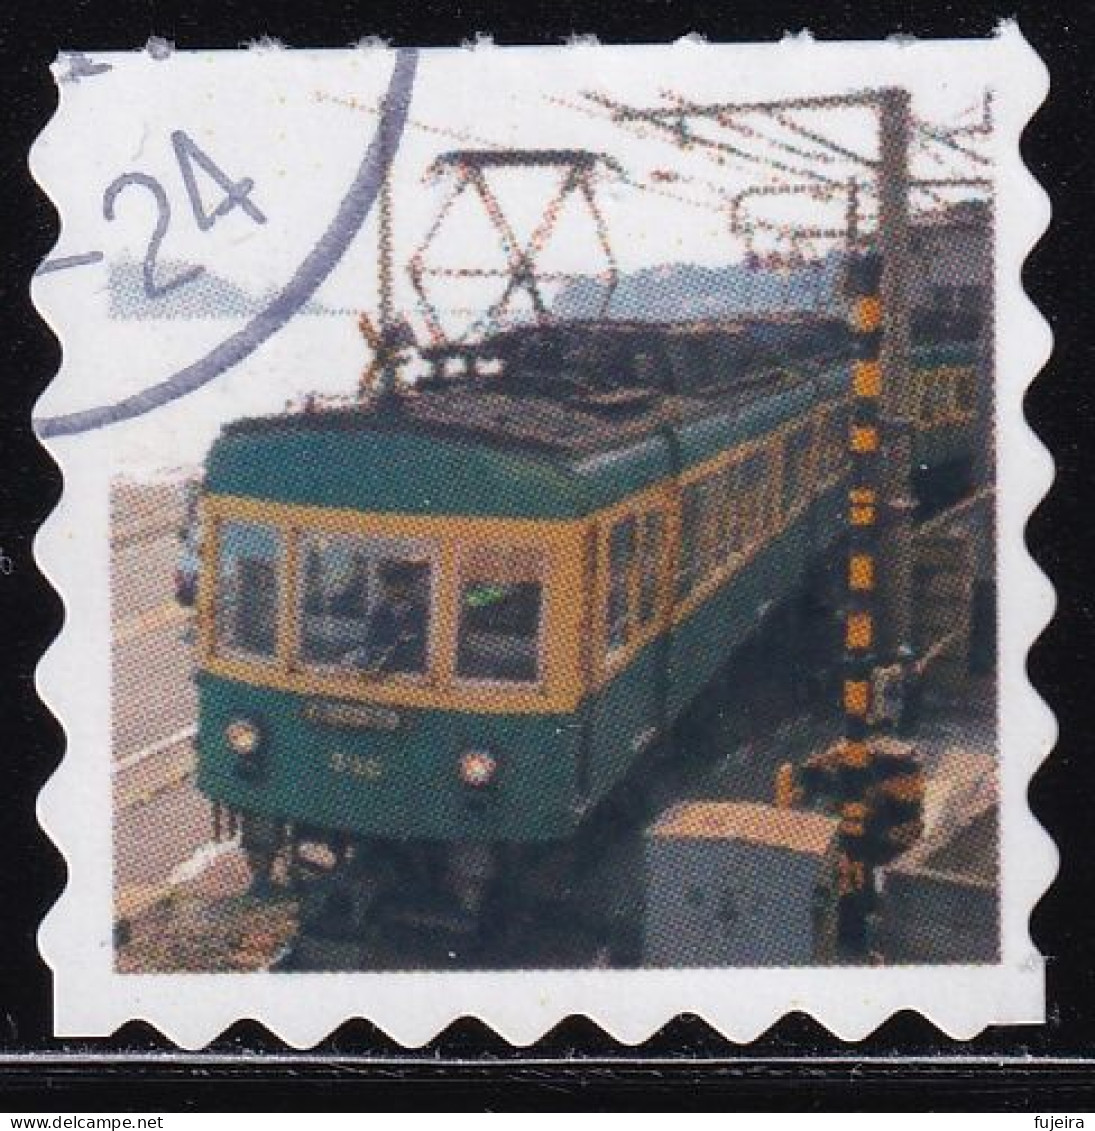 Japan Personalized Stamp, Train (jpv9733) Used - Usati